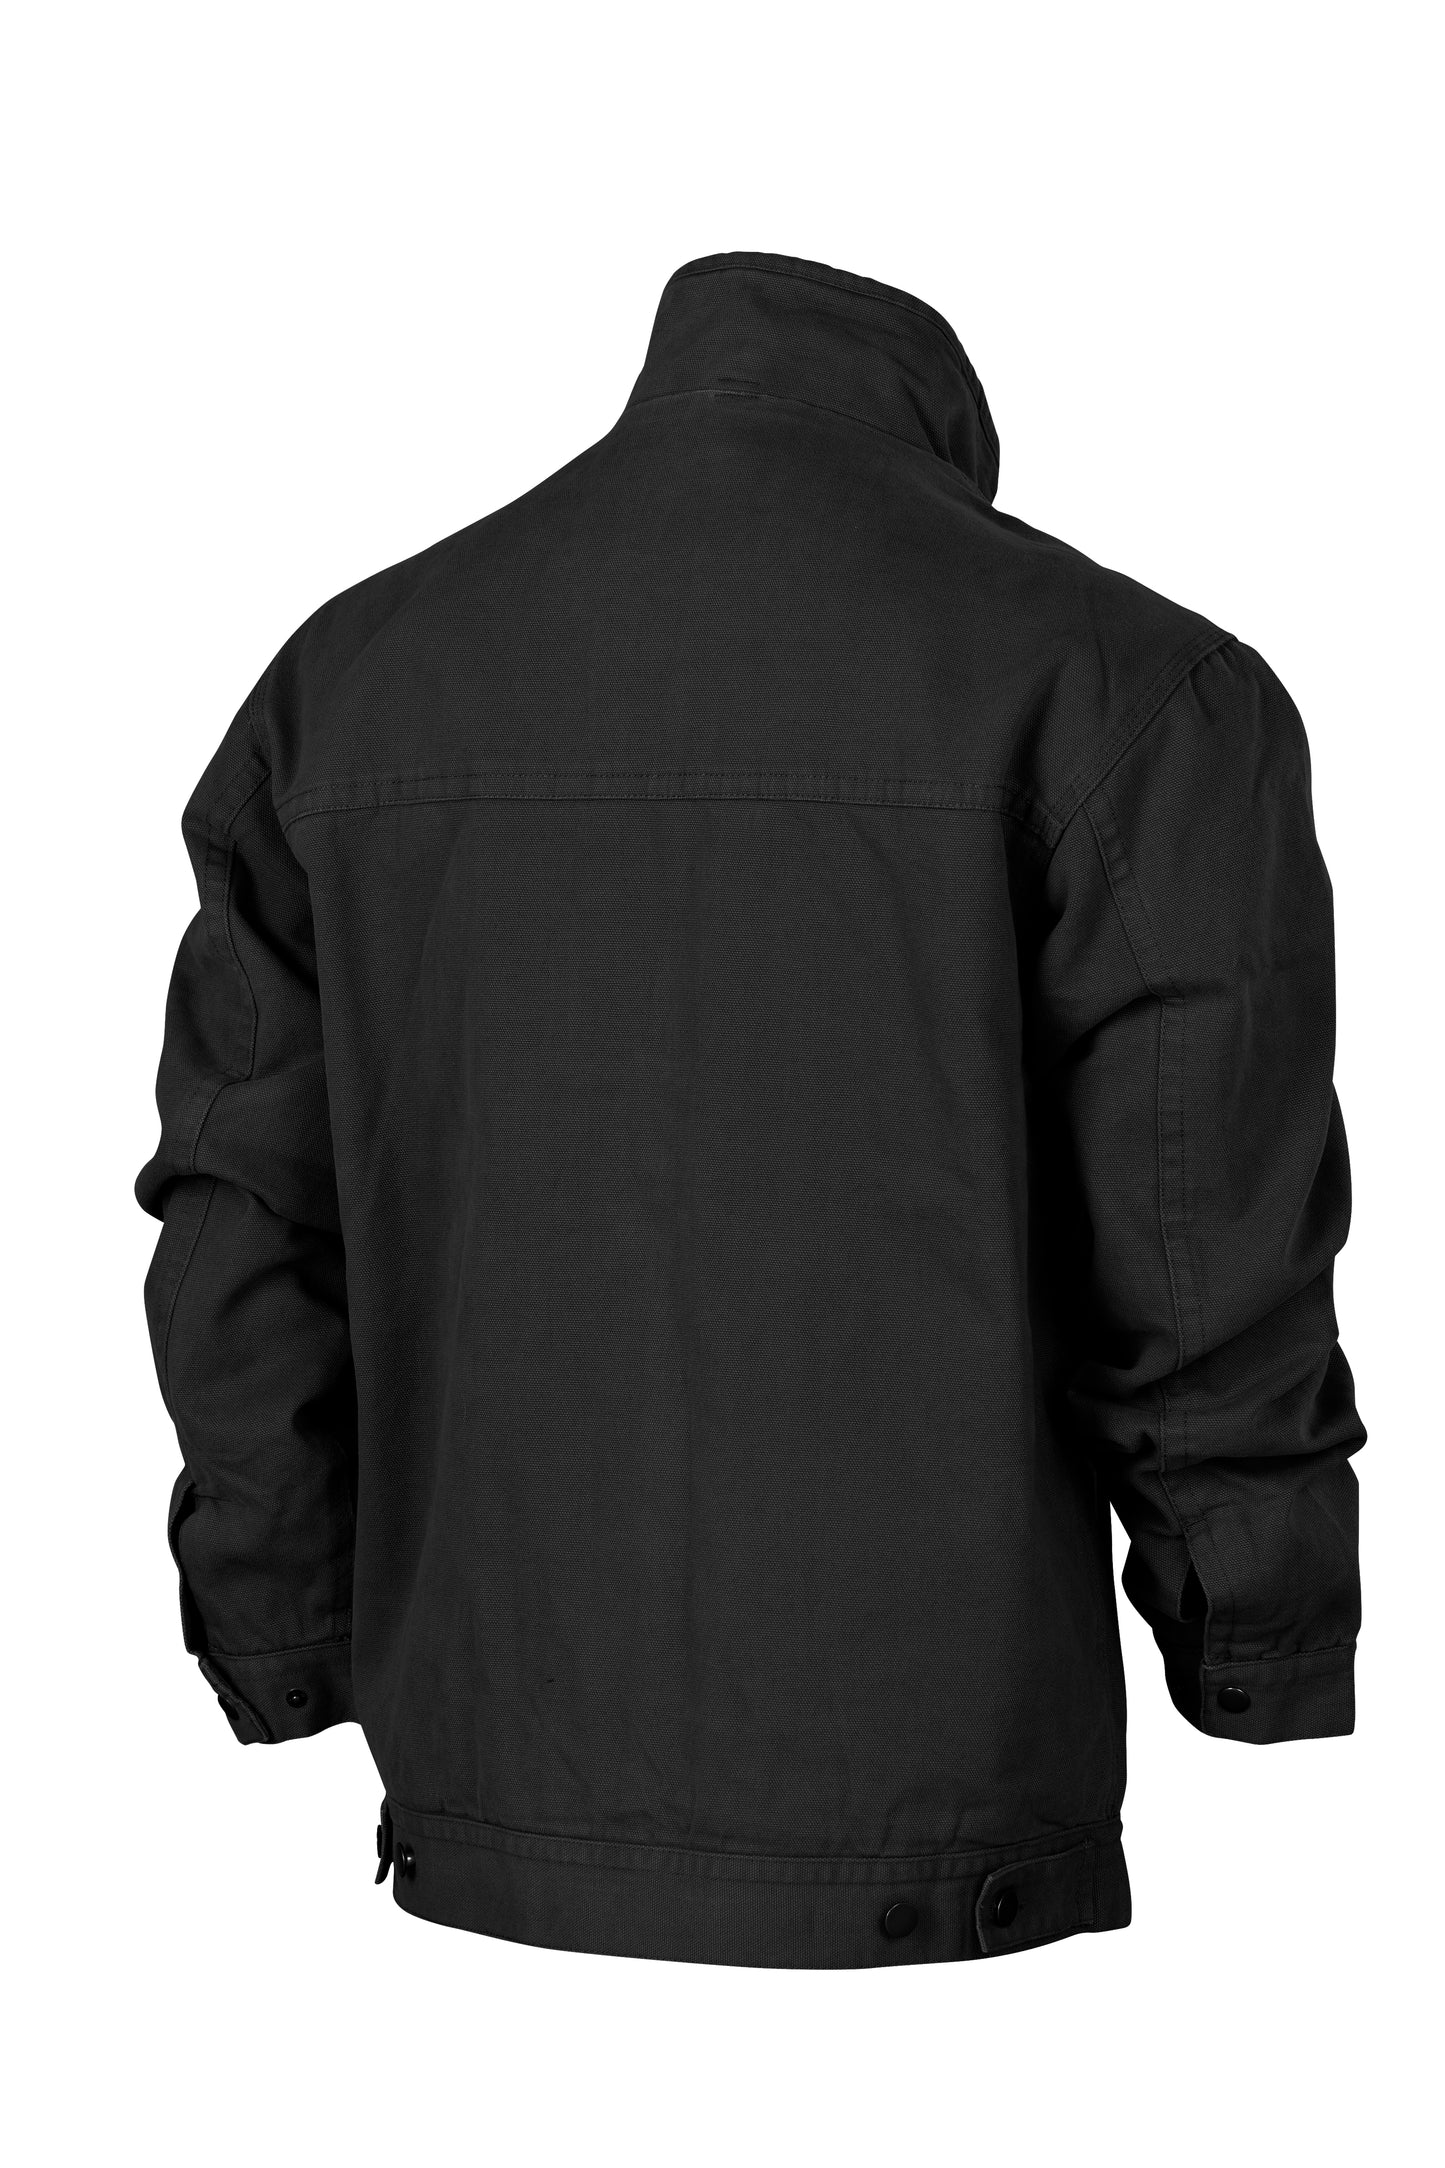 Cornerstone® Unisex Washed Duck Cloth Flannel-Lined Work Jacket